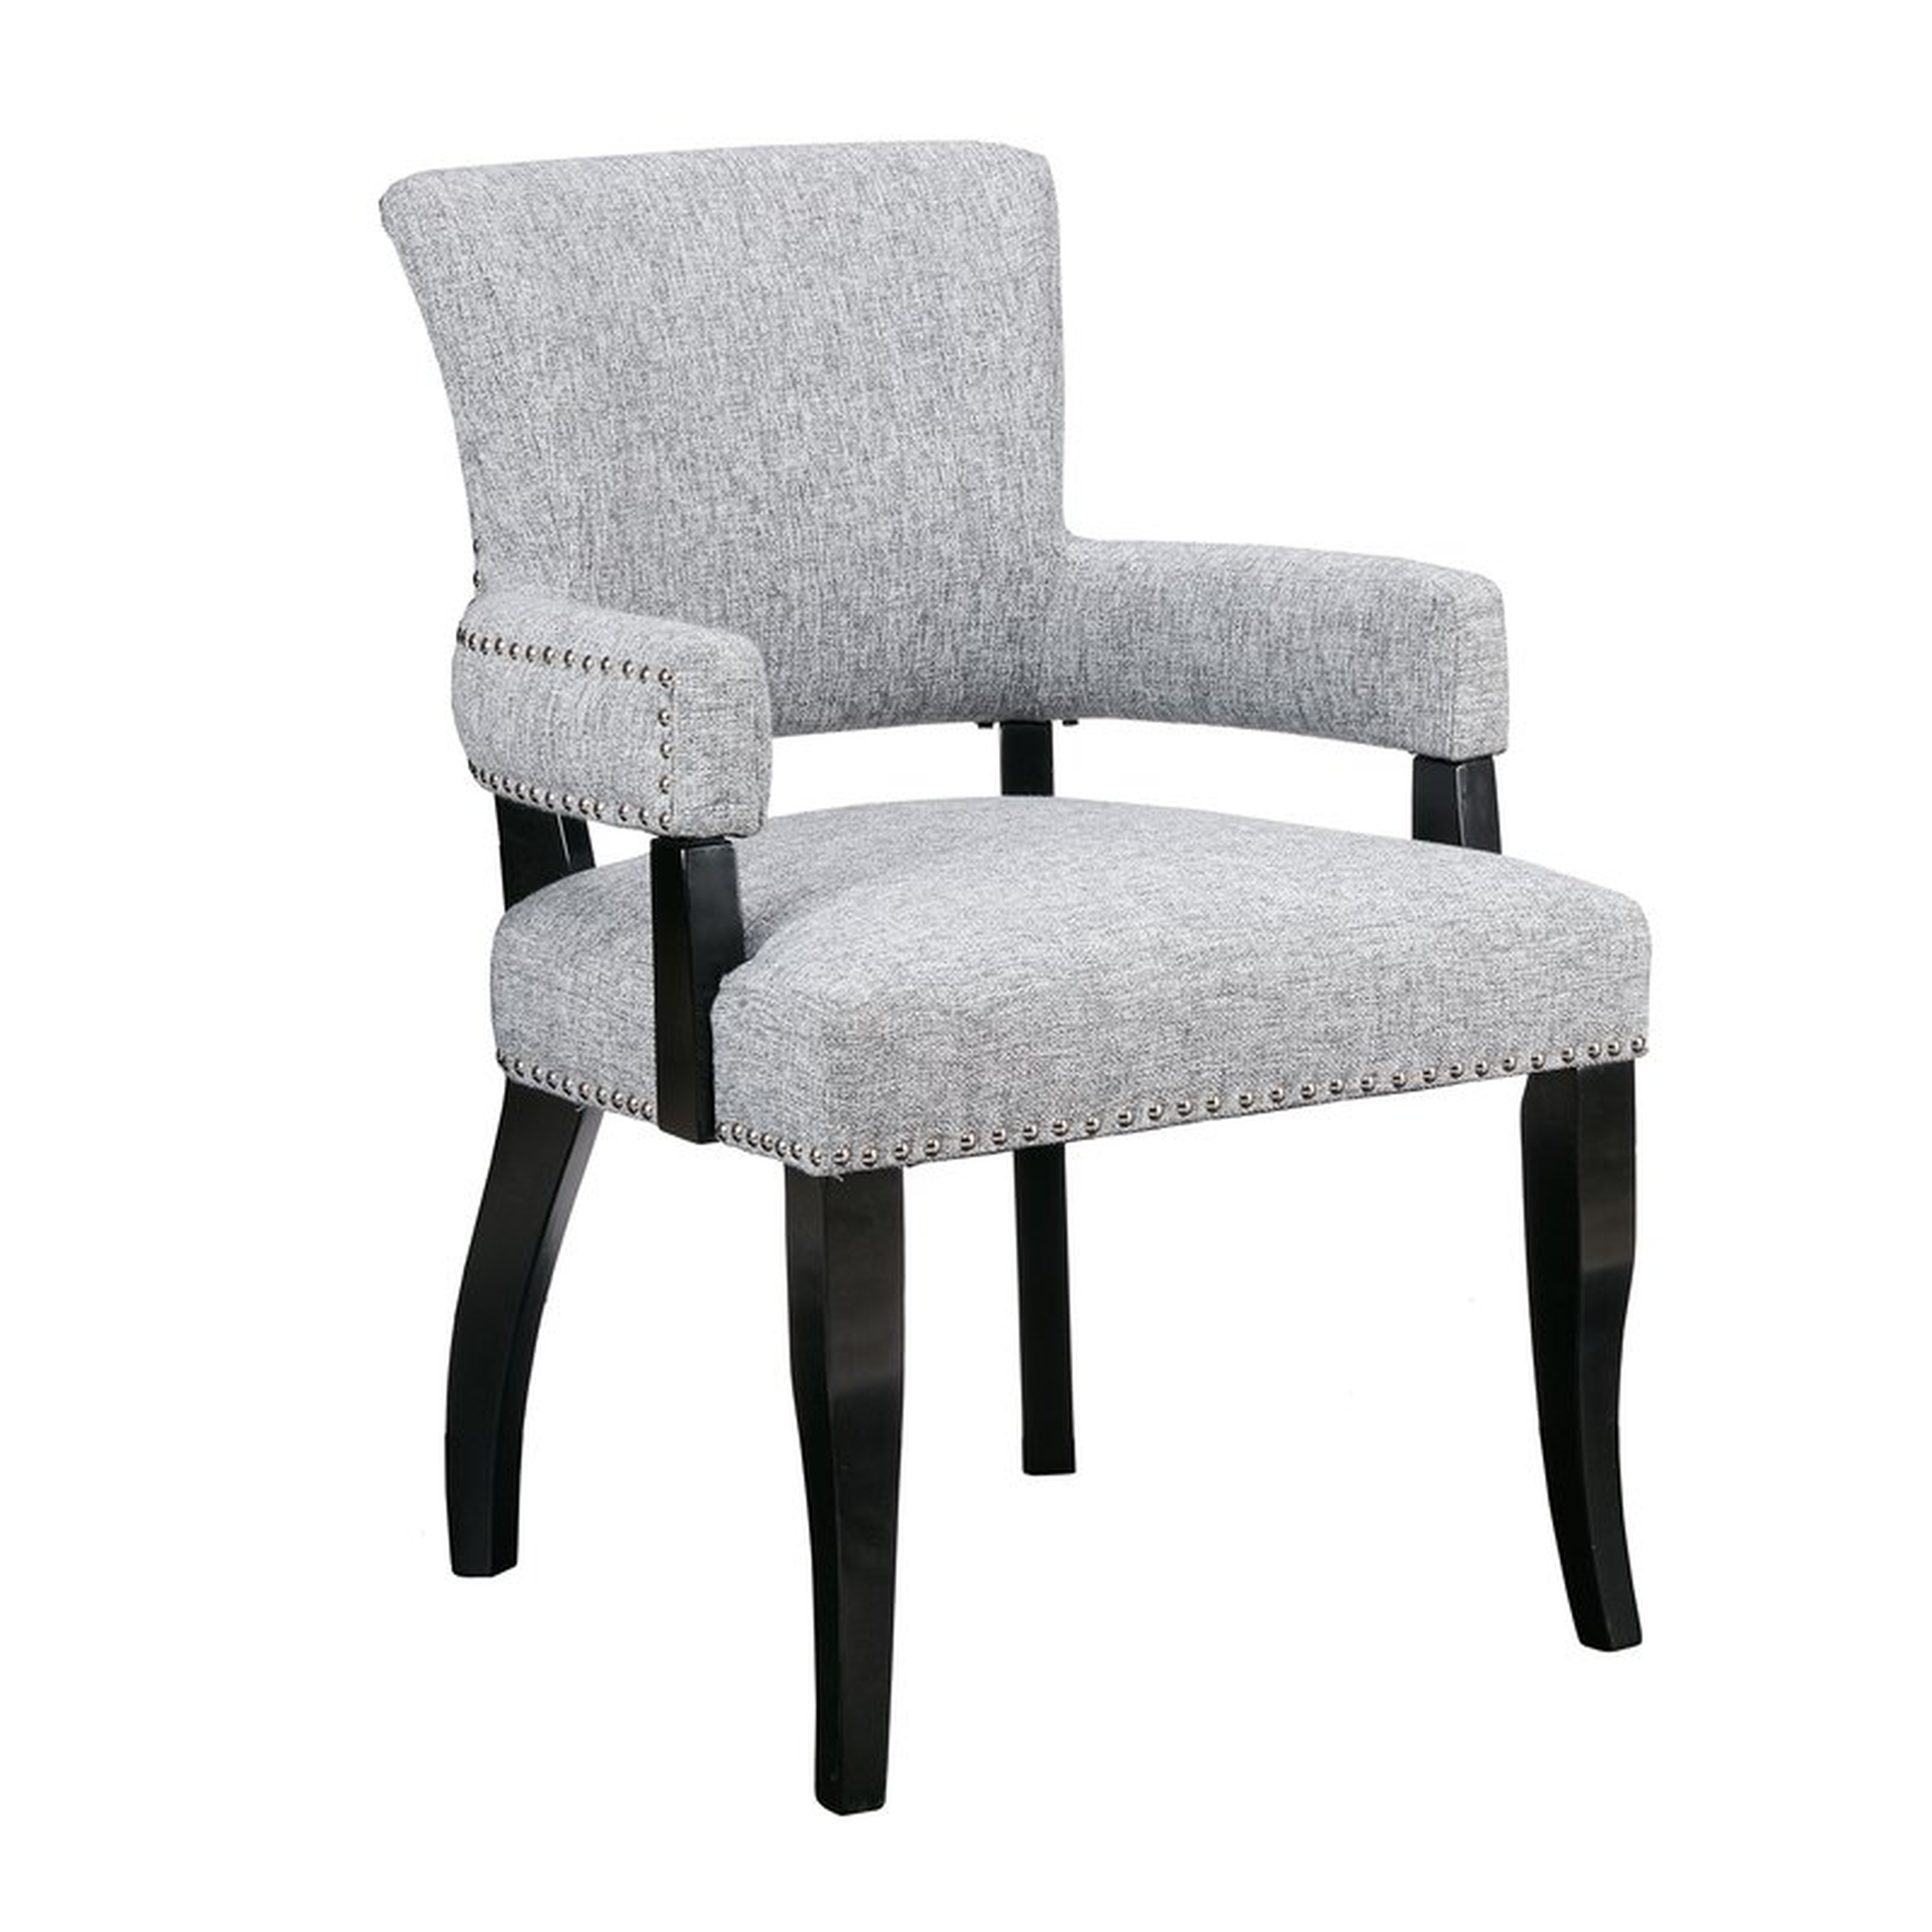 Gilberton Arm Chair - Wayfair